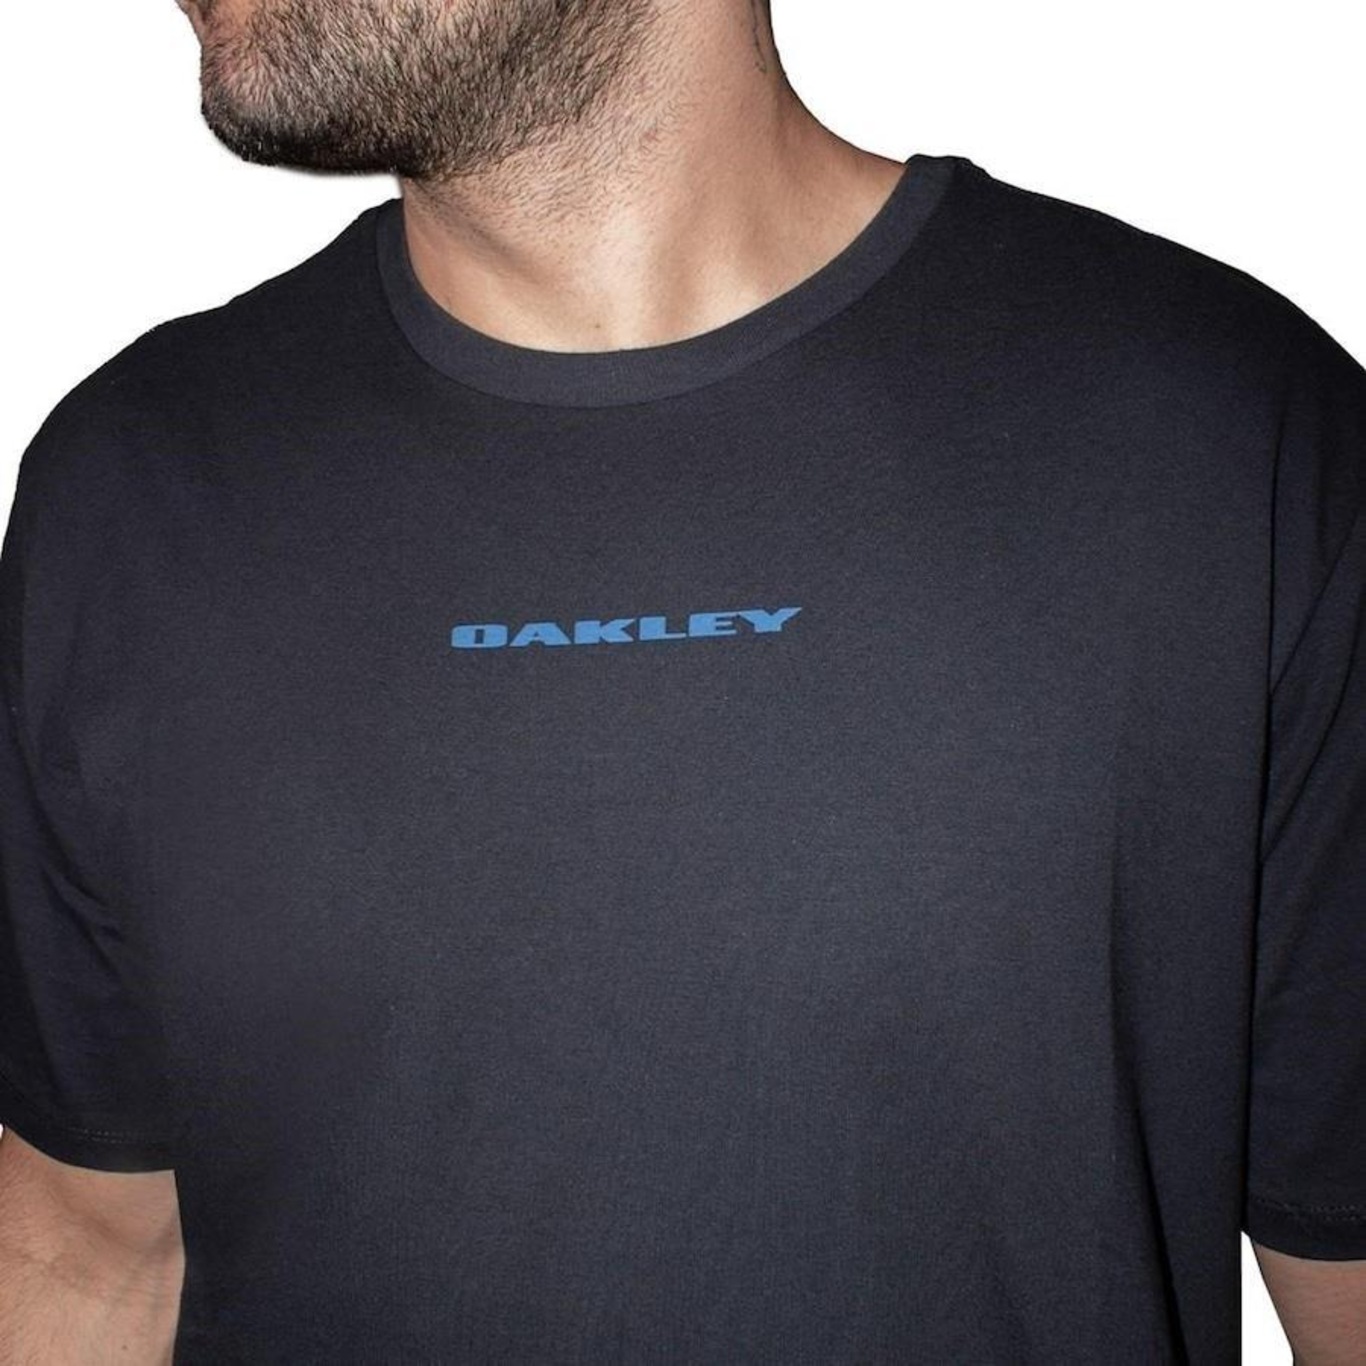 Camisetas Oakley Heritage Skull Graphic T Preto